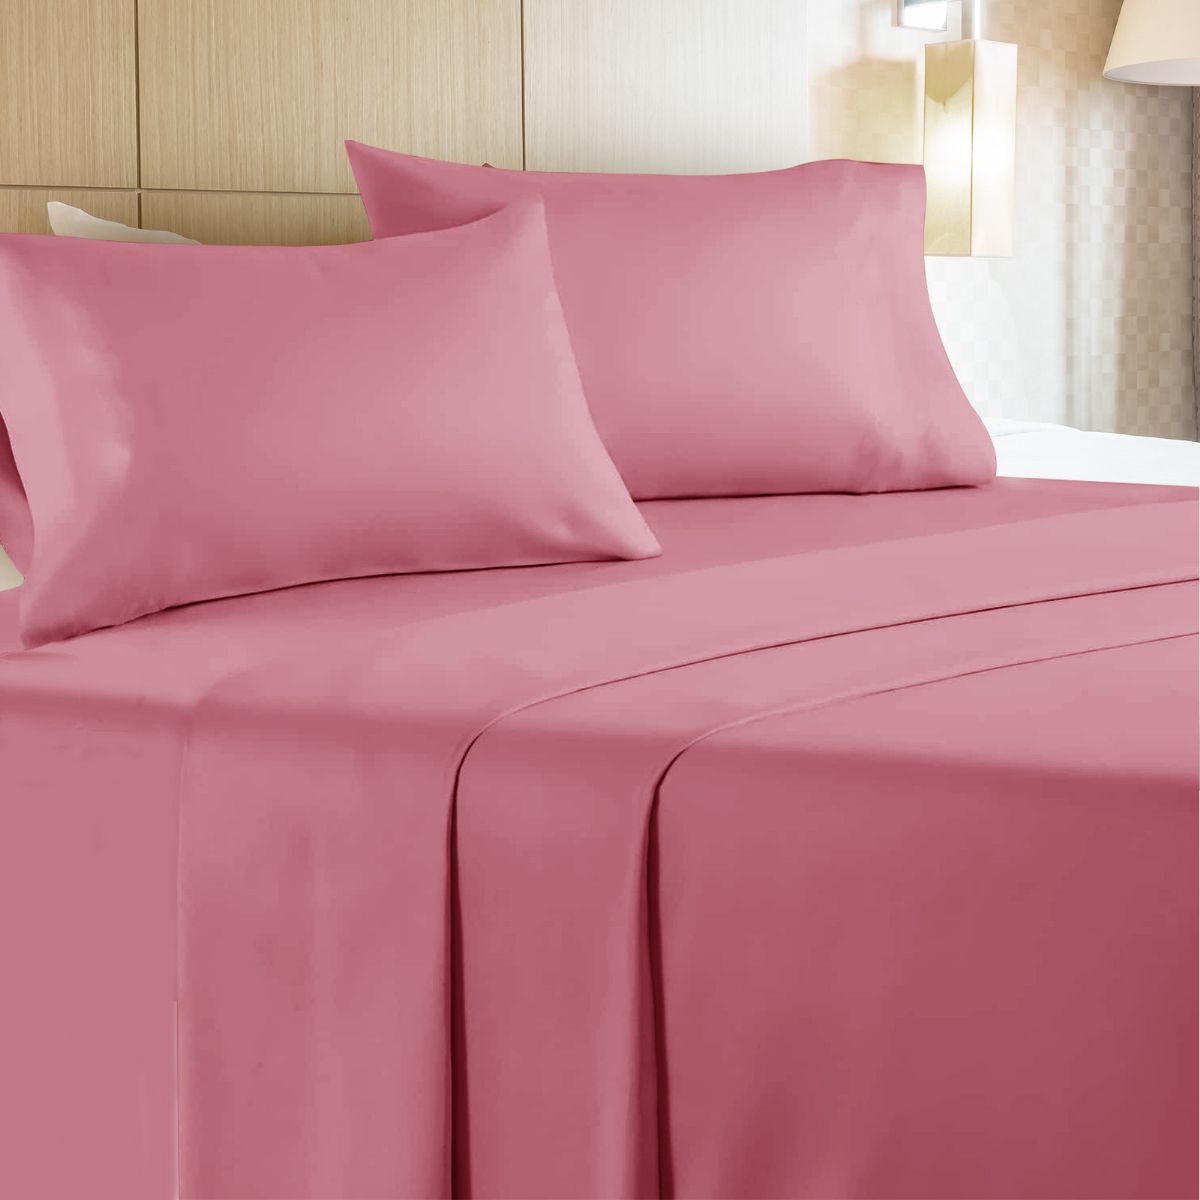 6 Wholesale 4 Piece Microfiber Bed Sheet Set King Size In Maroon